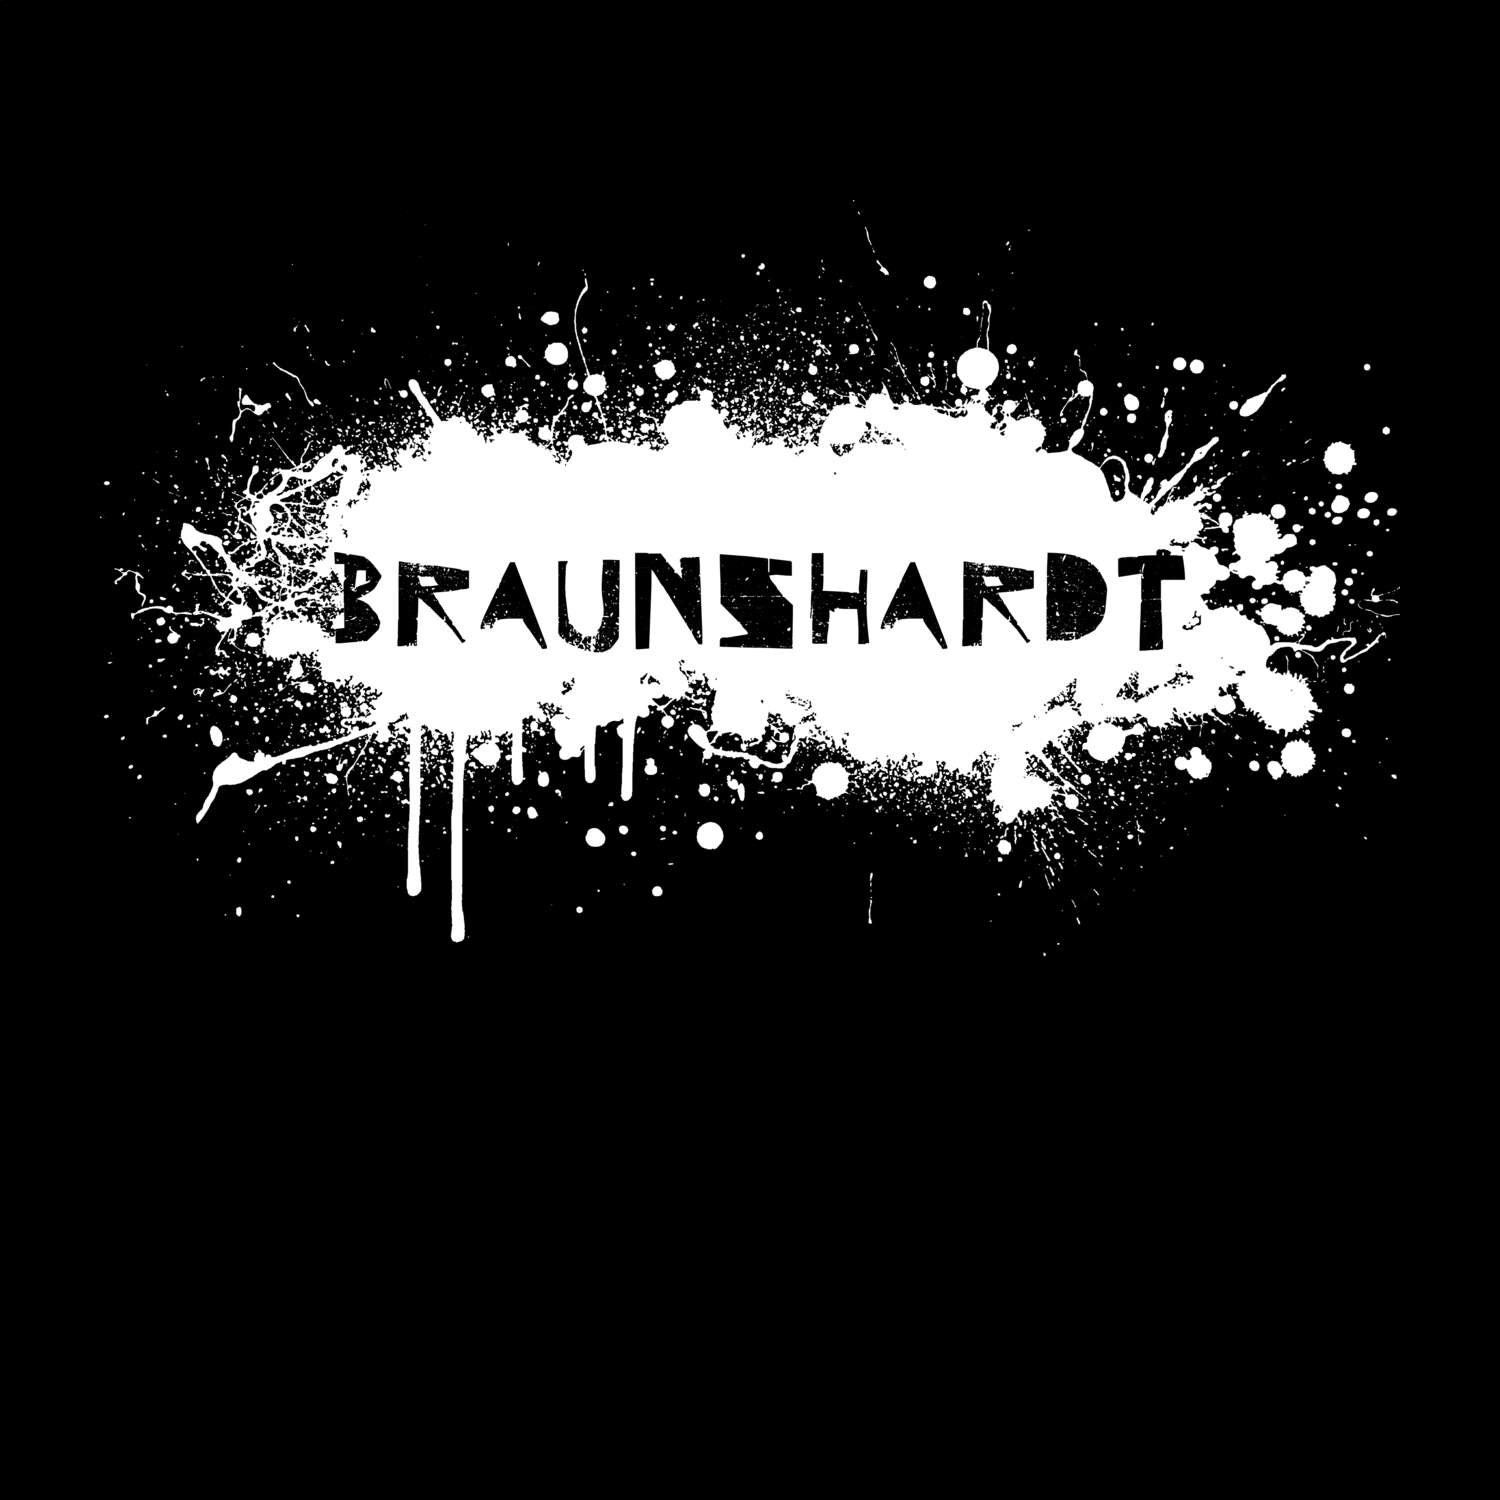 Braunshardt T-Shirt »Paint Splash Punk«